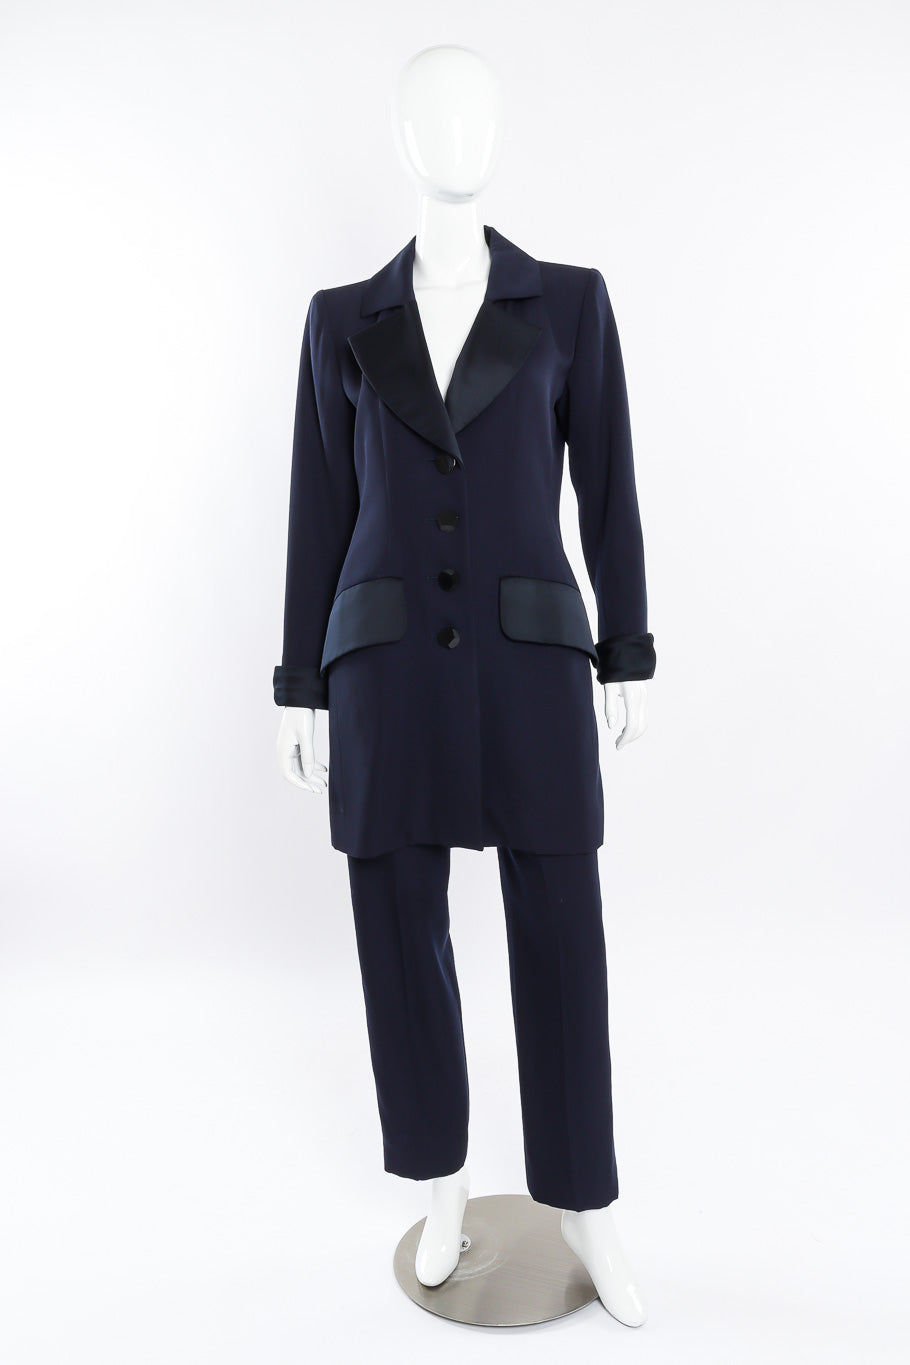 Wool longline blazer and pants by Yves Saint Laurent on mannequin @recessla